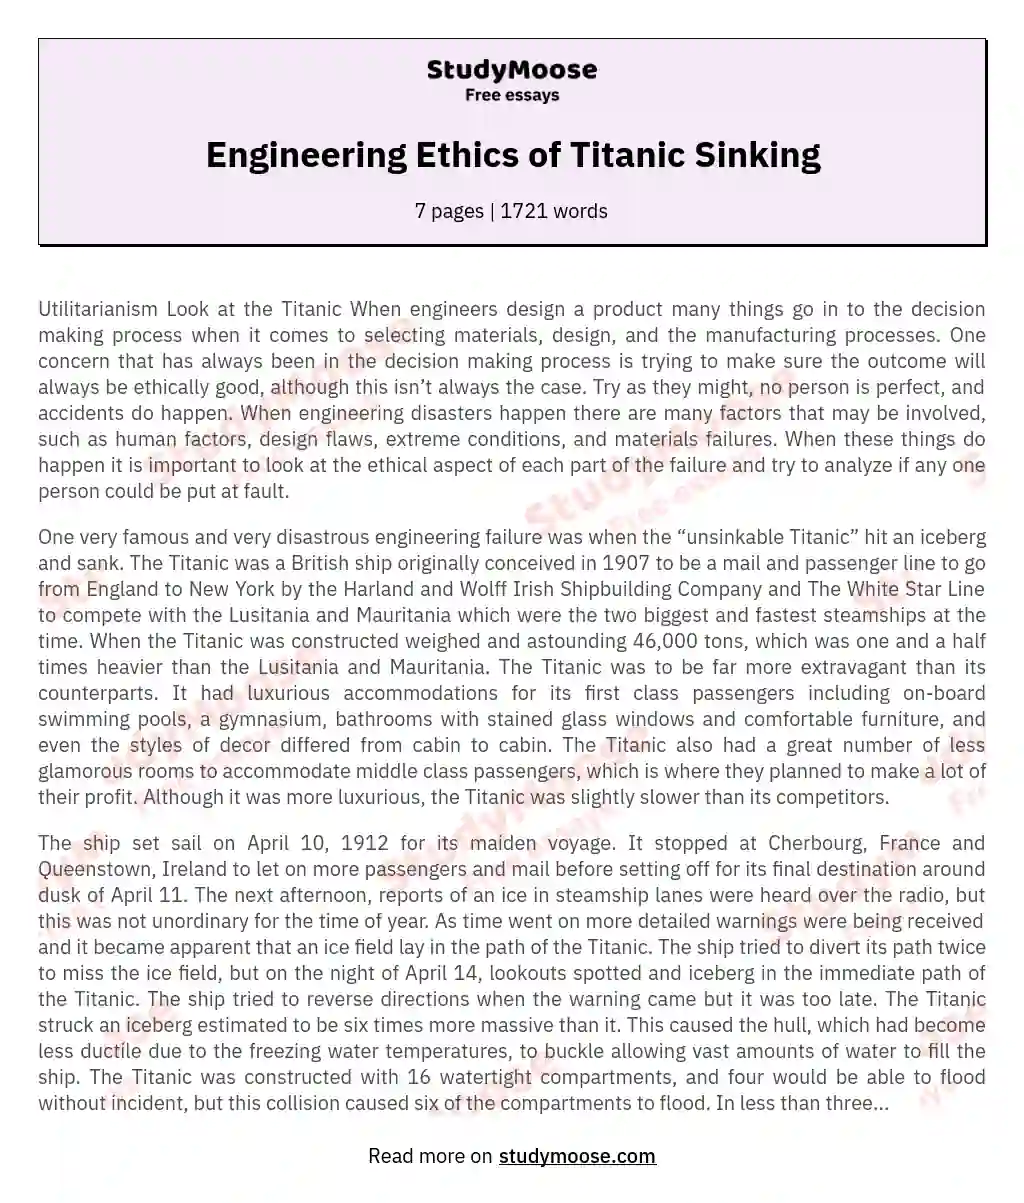 Engineering Ethics of Titanic Sinking